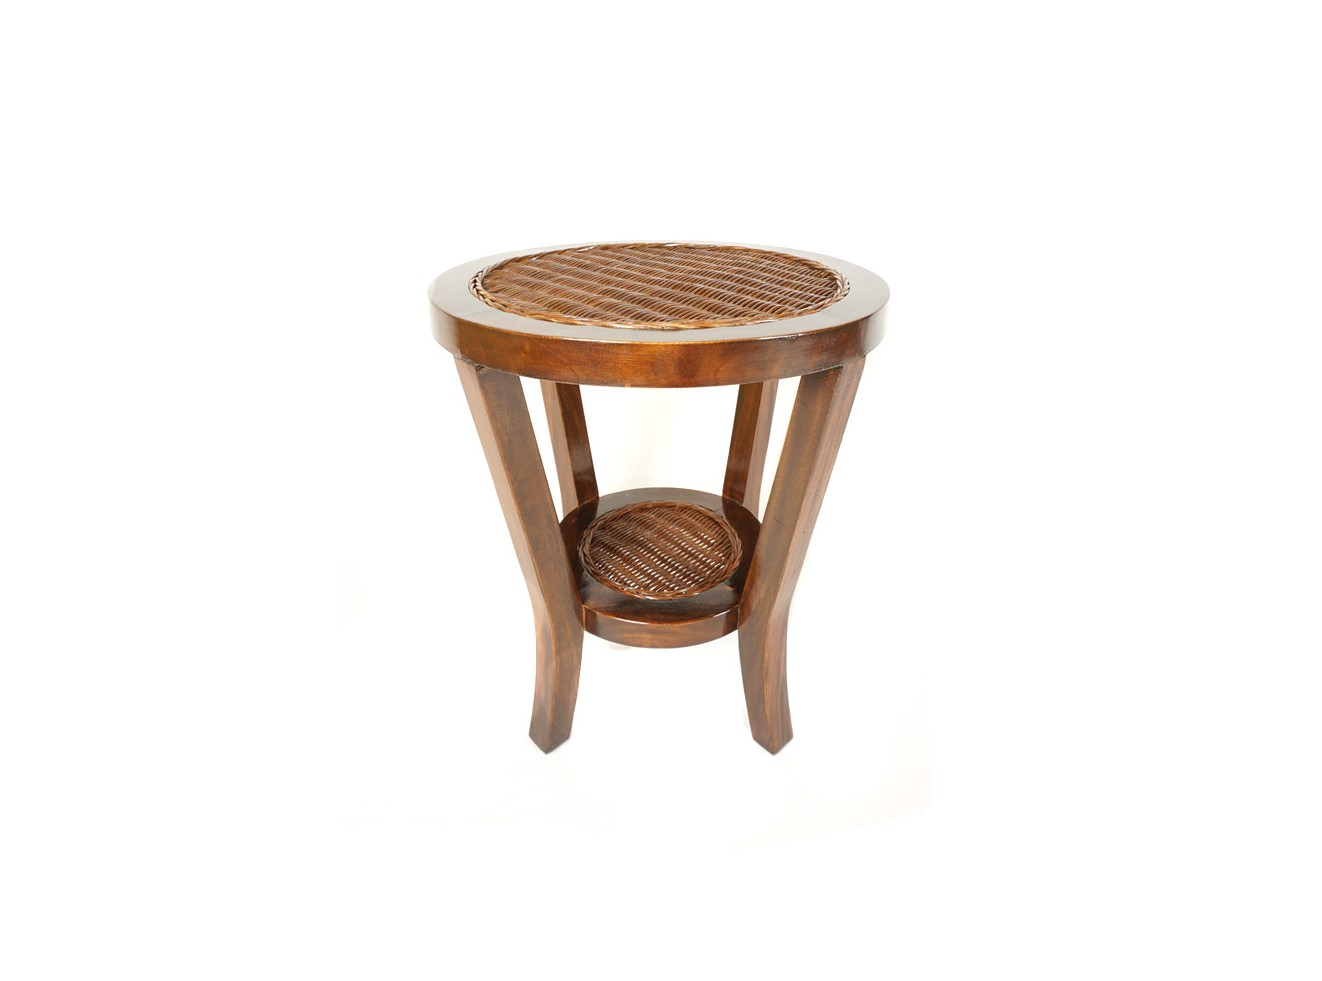 Ratanový obývací stolek PRAHA - tmavý med - Ratan